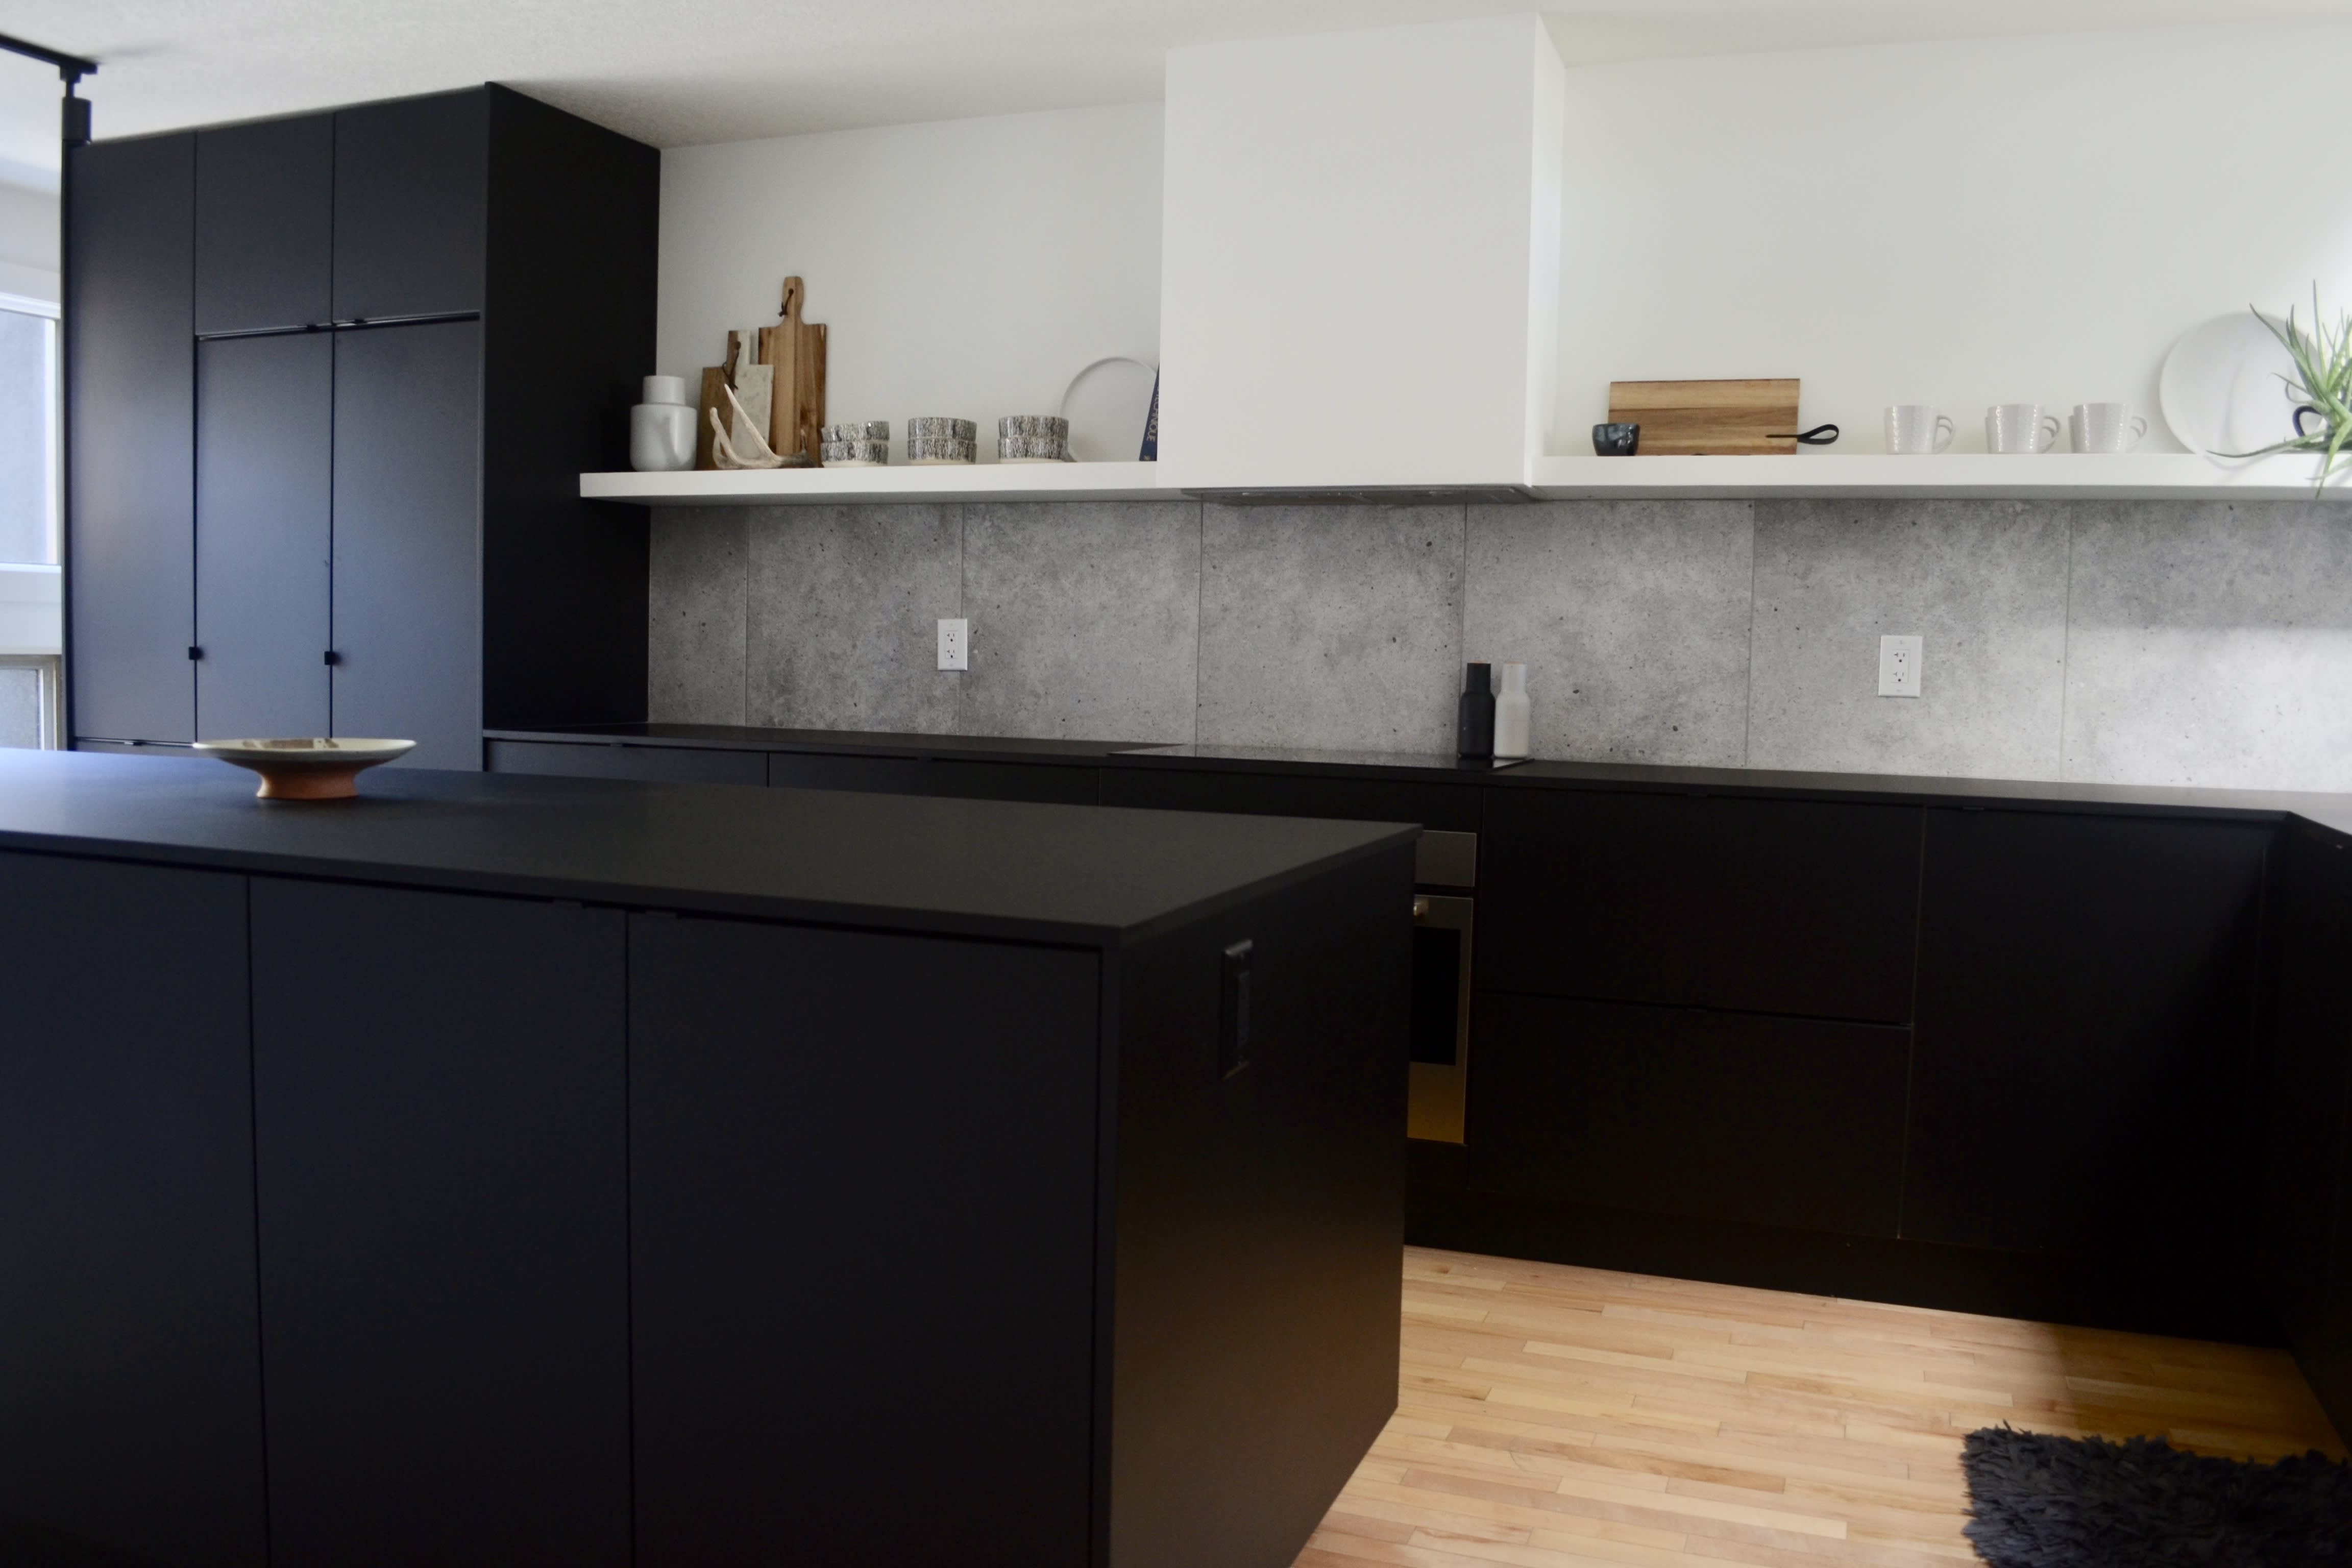 42 Timeless Black And White Kitchen Decor Ideas - Shelterness